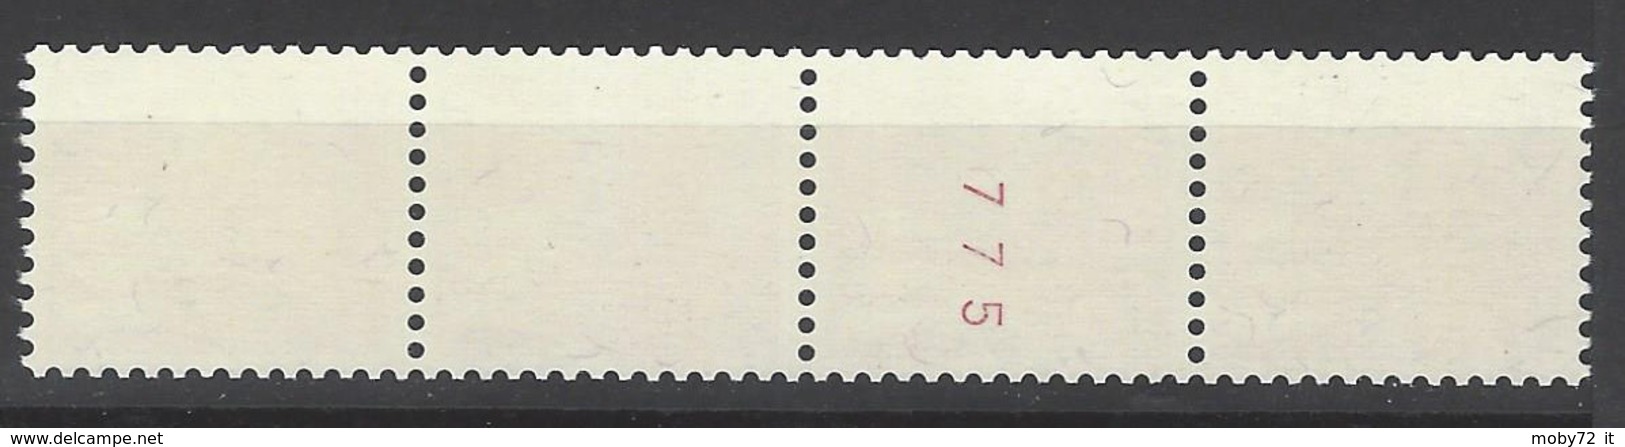 Svizzera - 1970 - Usato/used - Rollenmarken - Mi N. 933 - Francobolli In Bobina